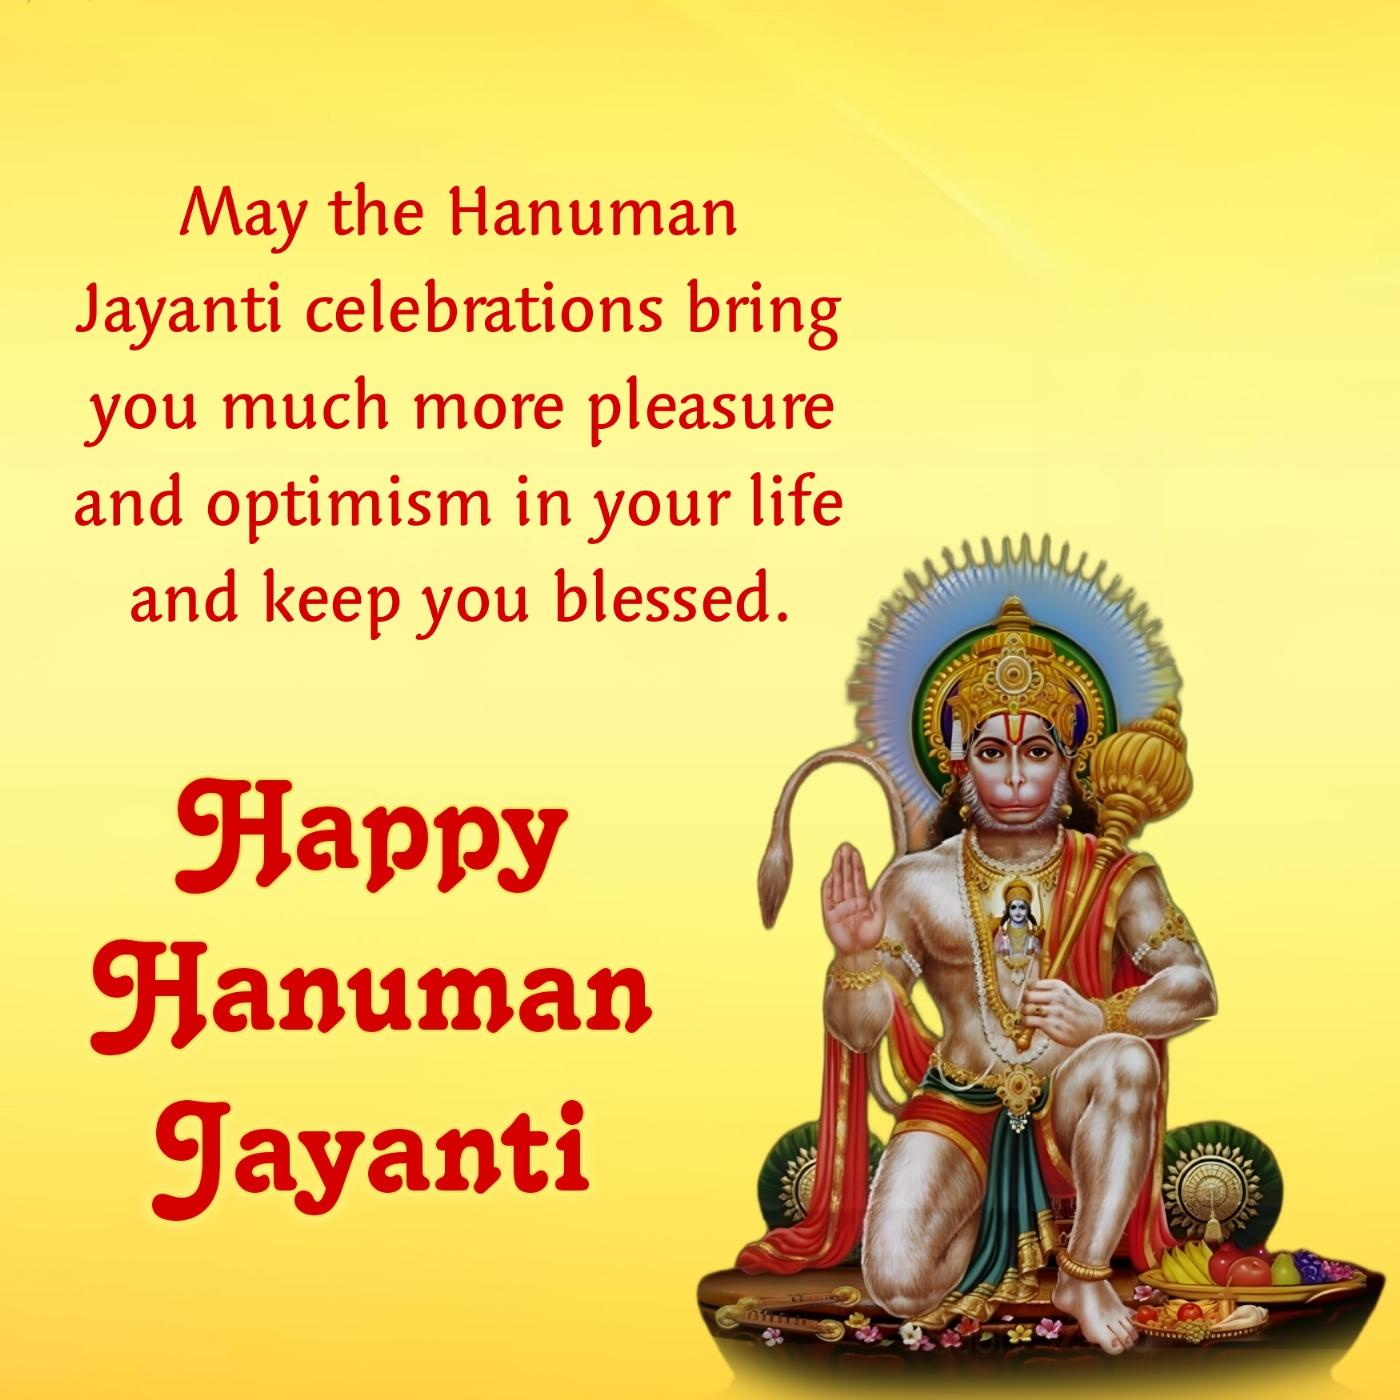 May the Hanuman Jayanti celebrations bring you